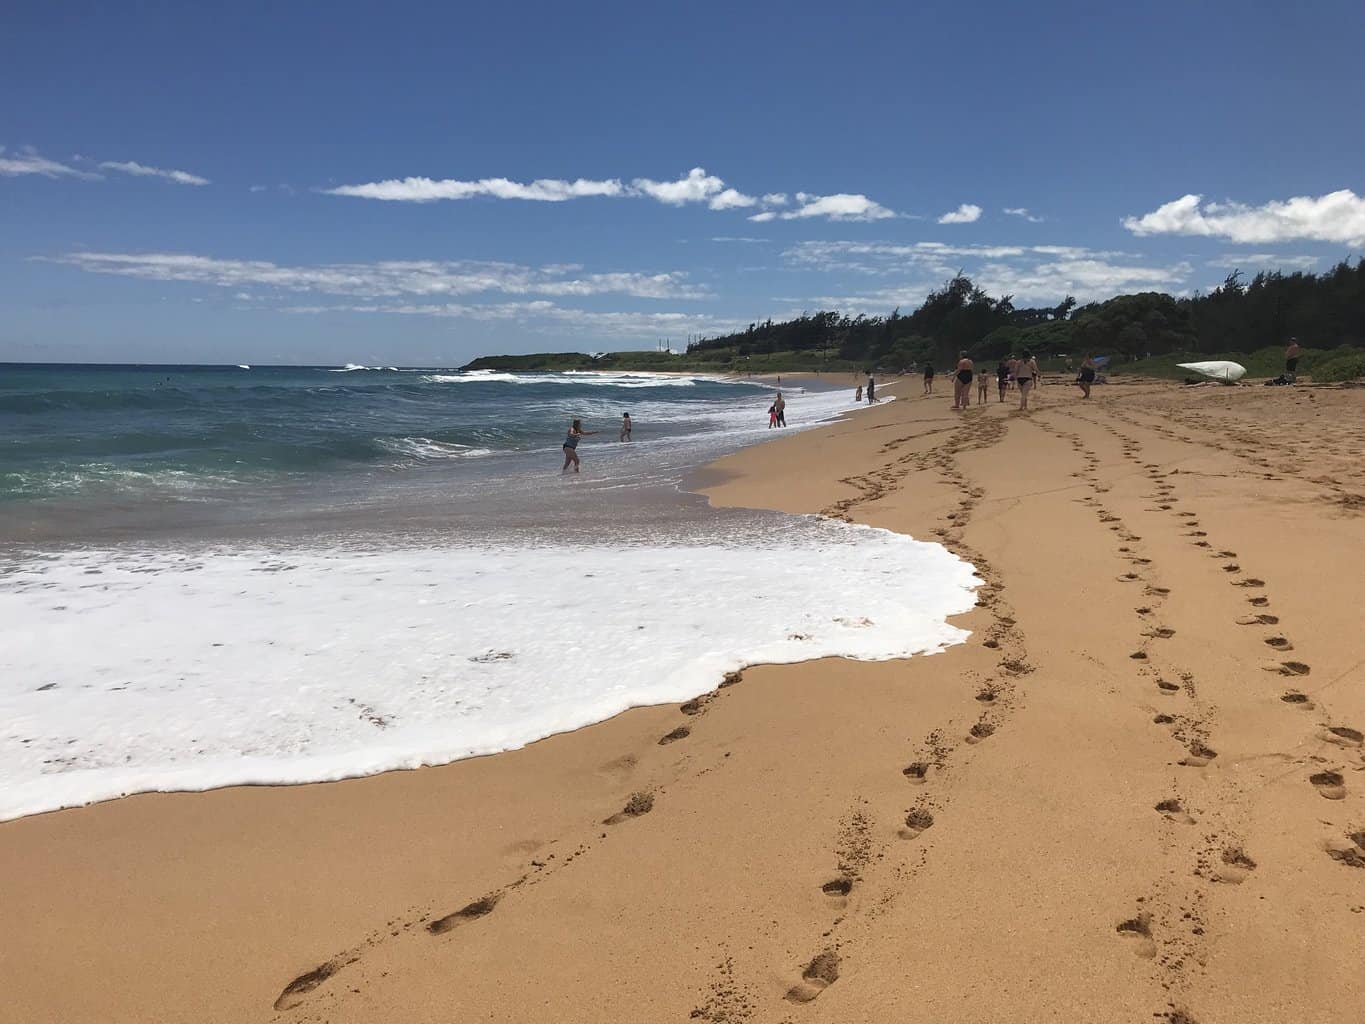 Kealia Beach footprints